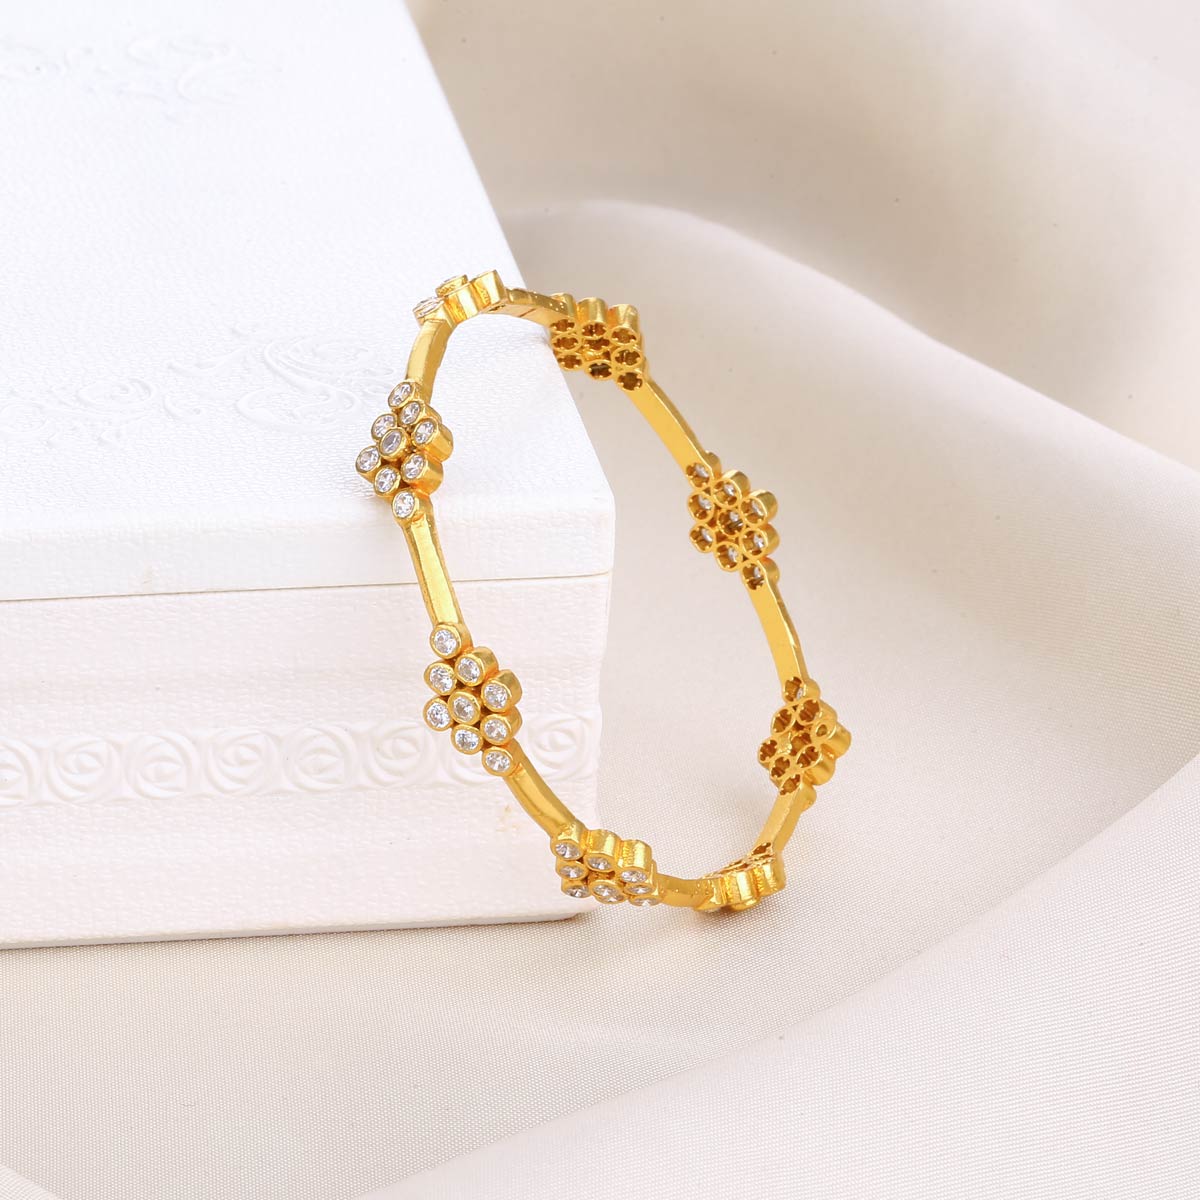 Gold filled empaths protection gemstone bracelet - NicteShop